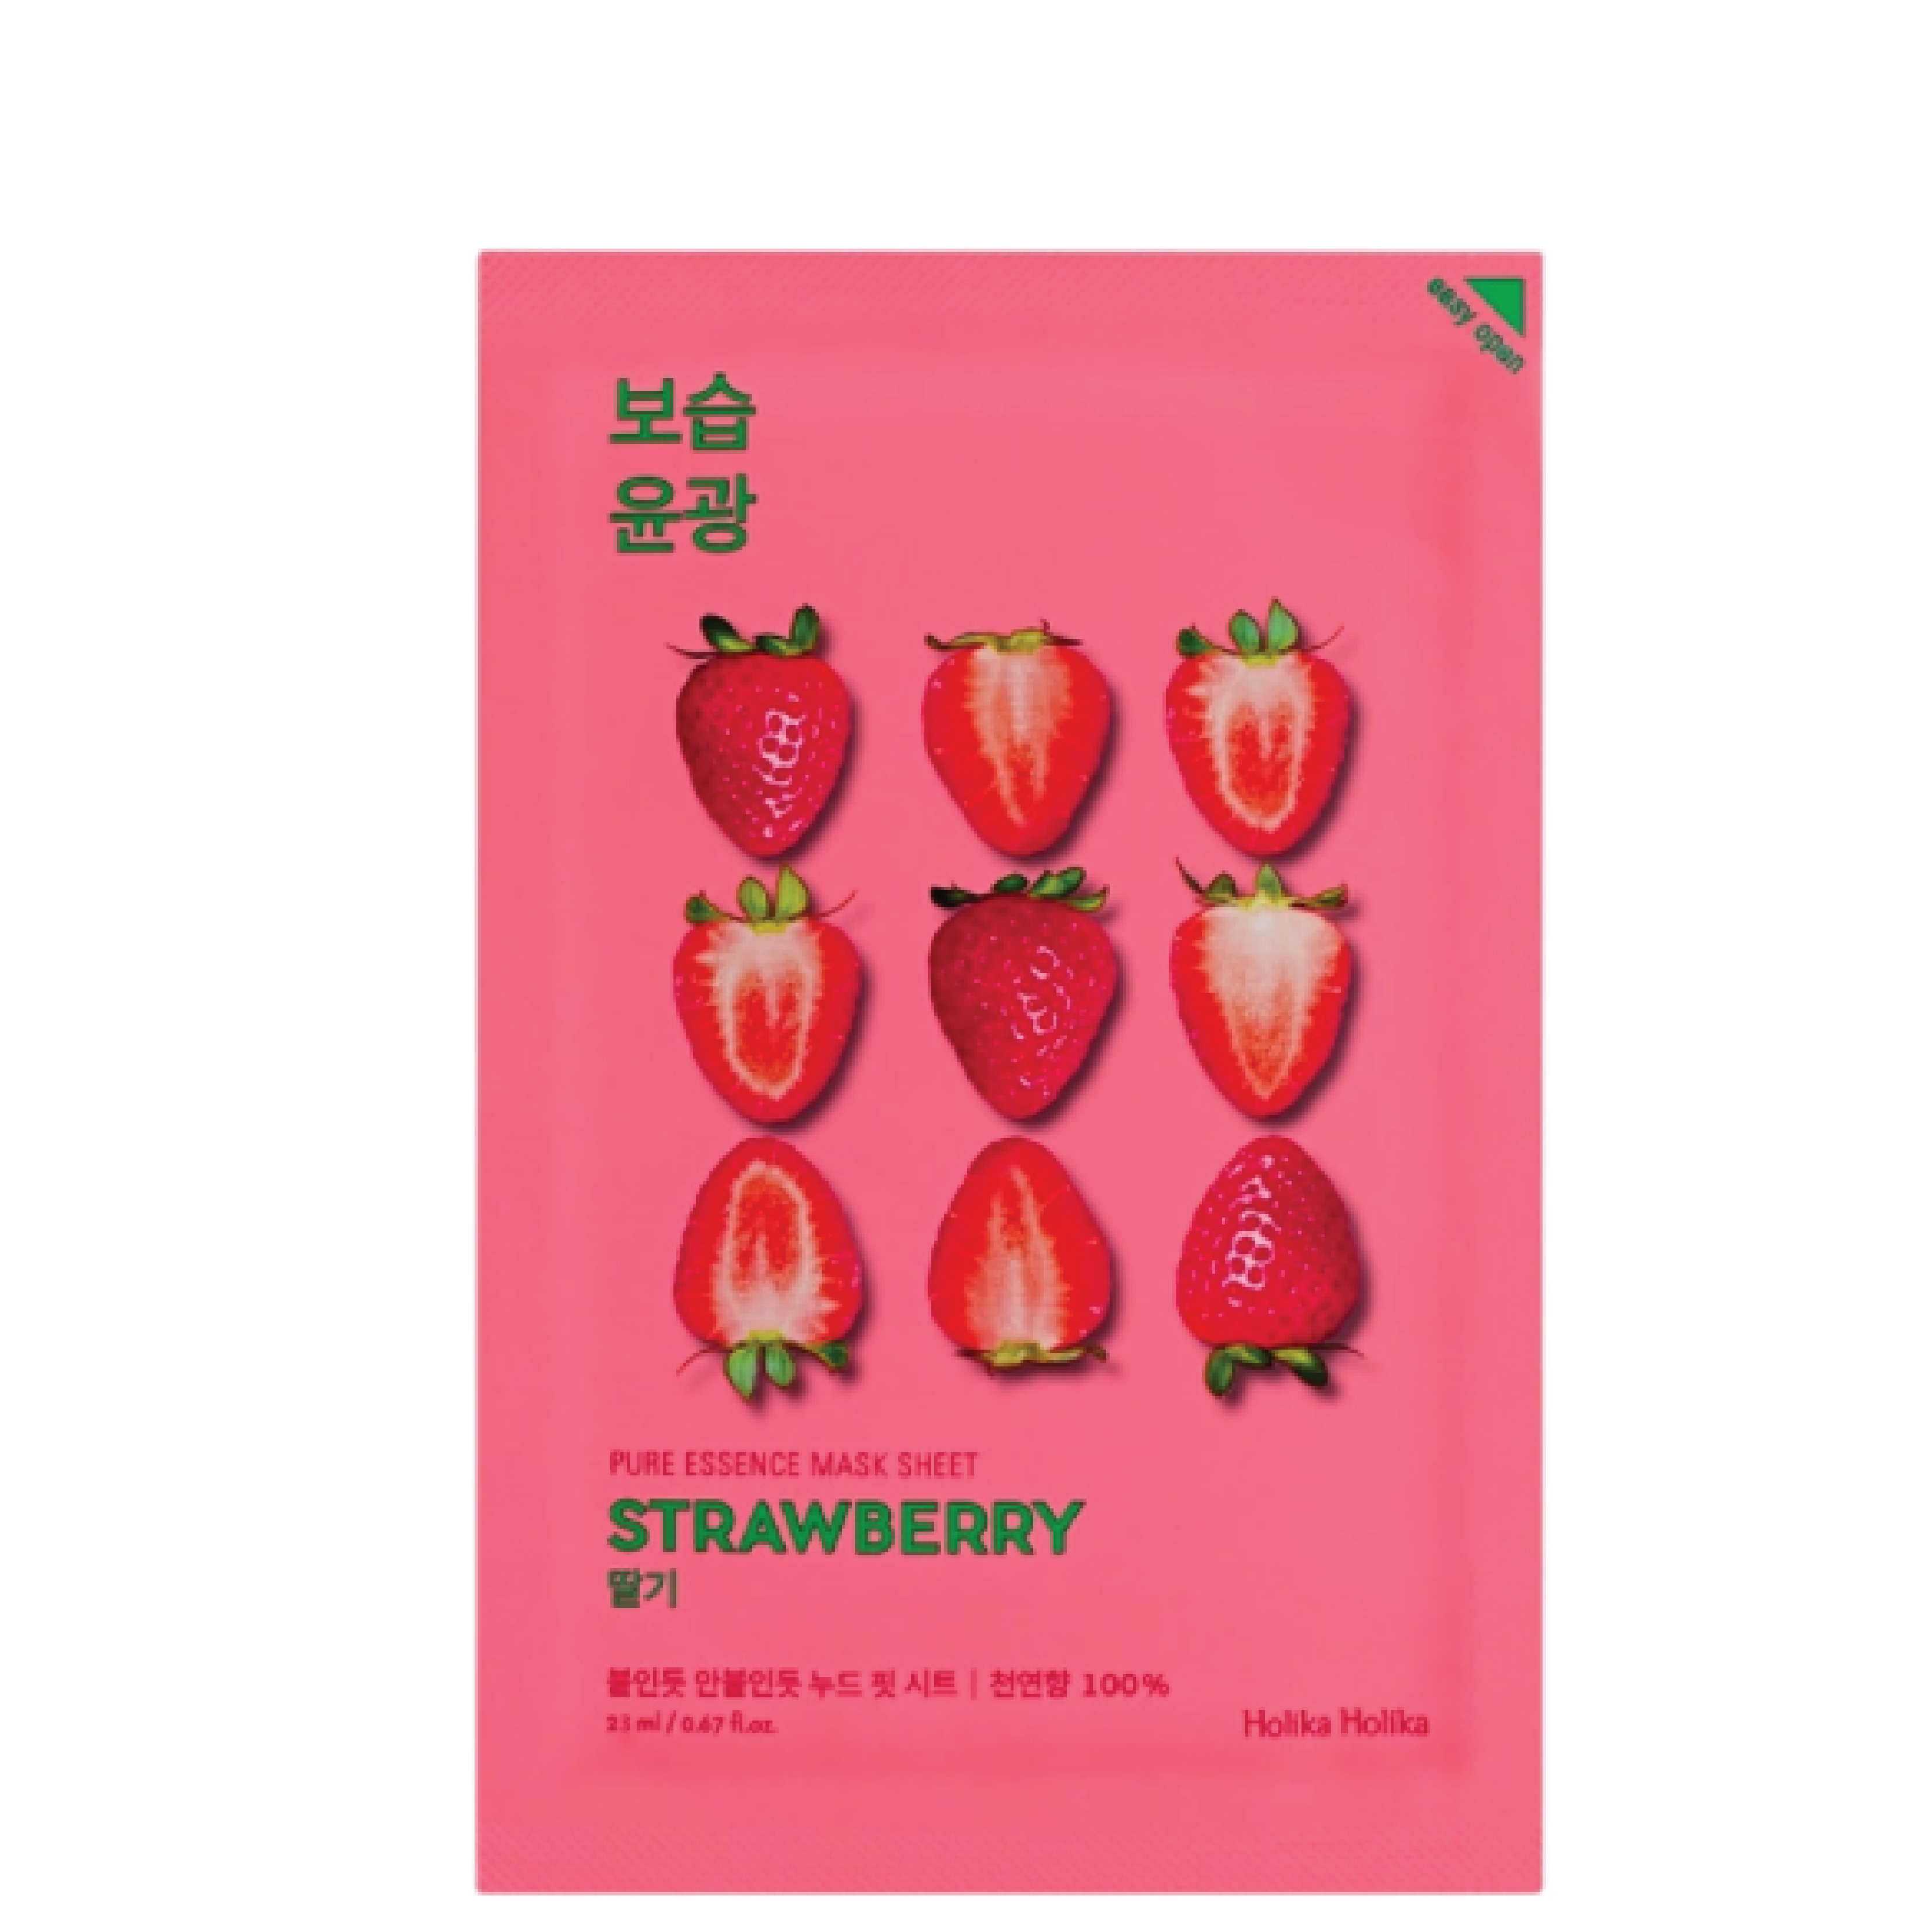 Holika Holika Strawberry Pure Essence Mask